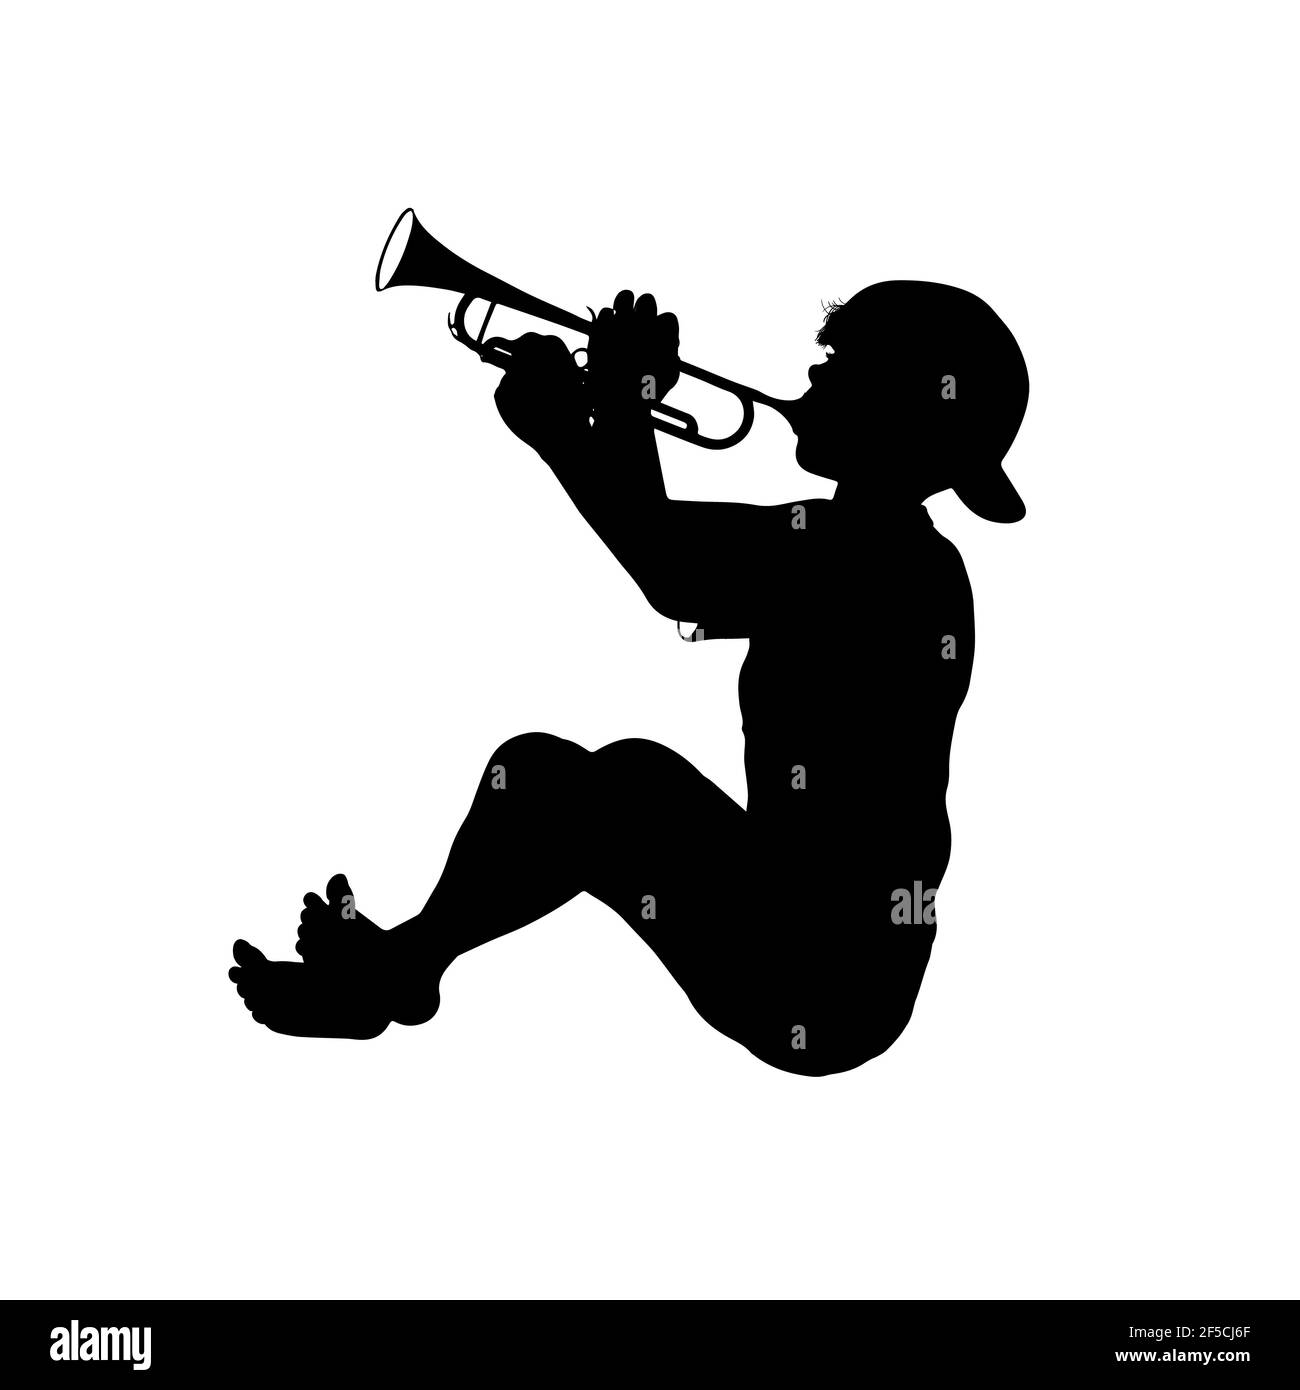 https://c8.alamy.com/comp/2F5CJ6F/silhouette-boy-kid-playing-trumpet-music-instrument-sitting-barefoot-happy-joy-sound-play-practicing-student-teenager-music-school-logo-template-desig-2F5CJ6F.jpg